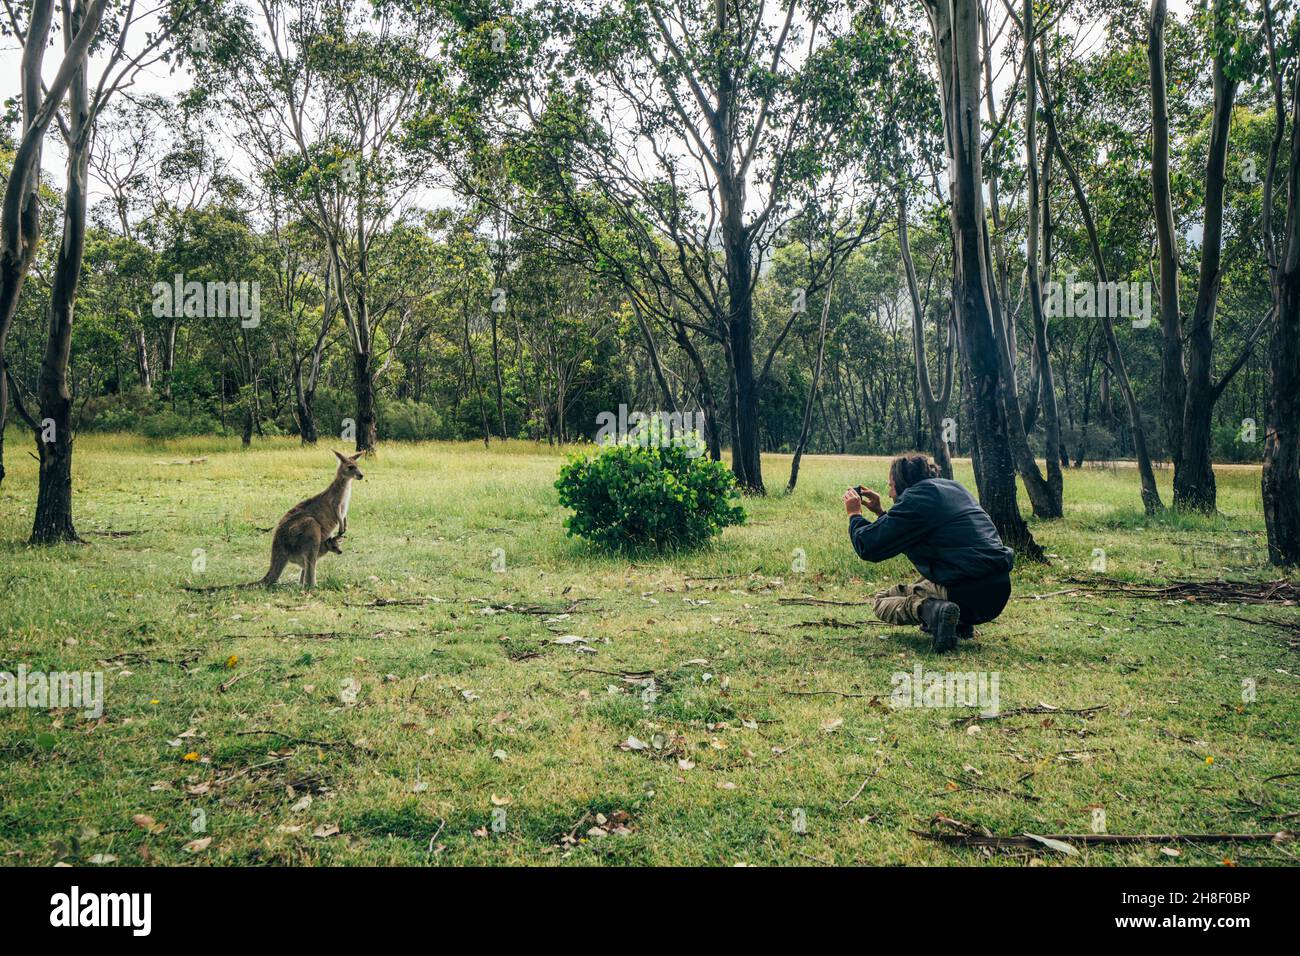 Man photographing kangaroo, Australia Stock Photo